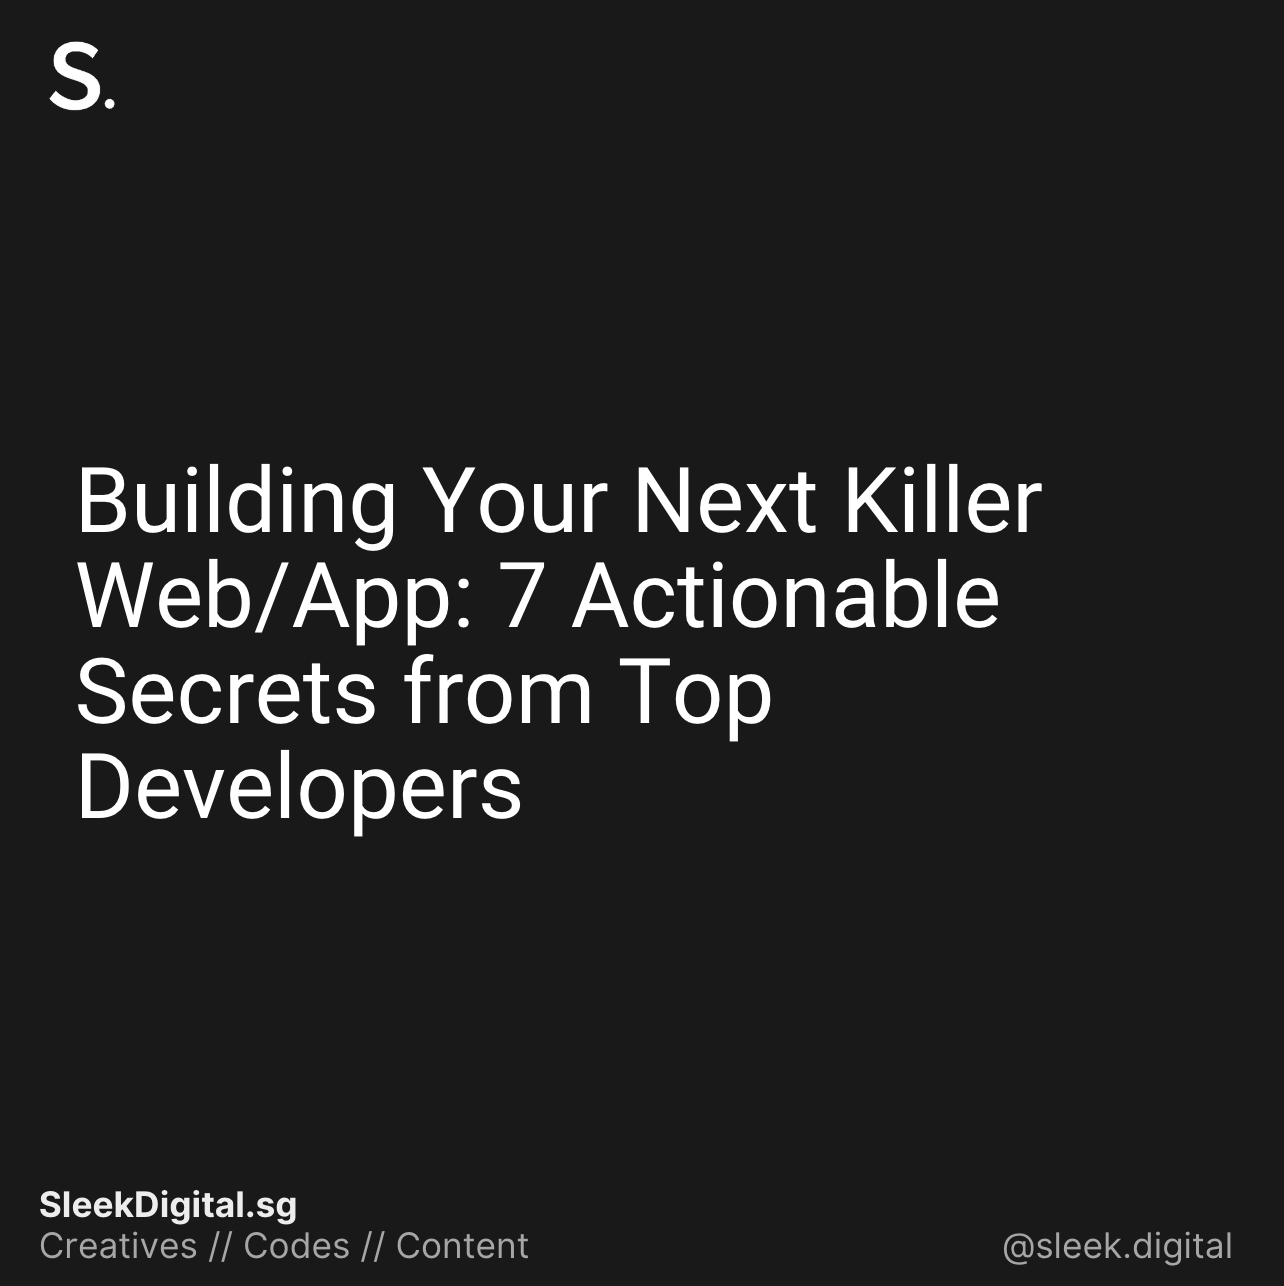 Building Your Next Killer Web/App: 7 Actionable Secrets from Top Developers